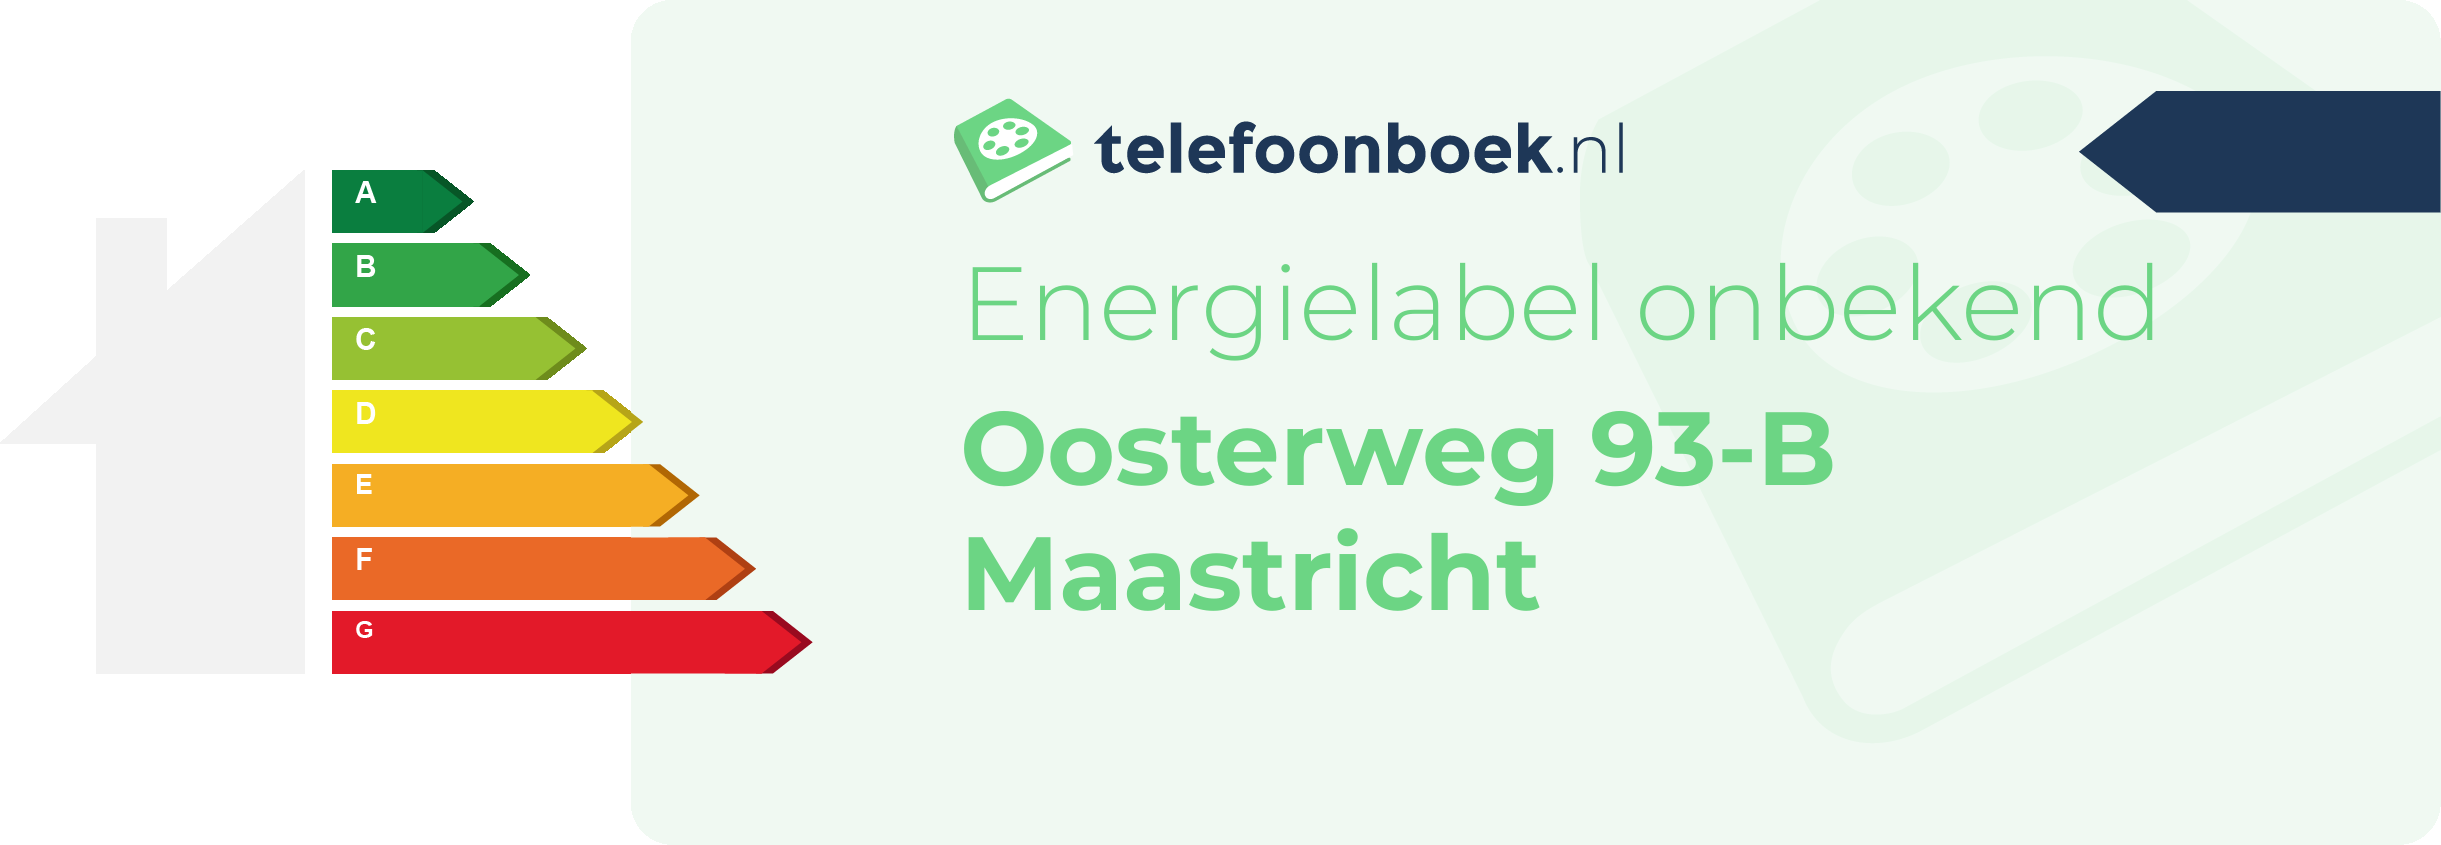 Energielabel Oosterweg 93-B Maastricht